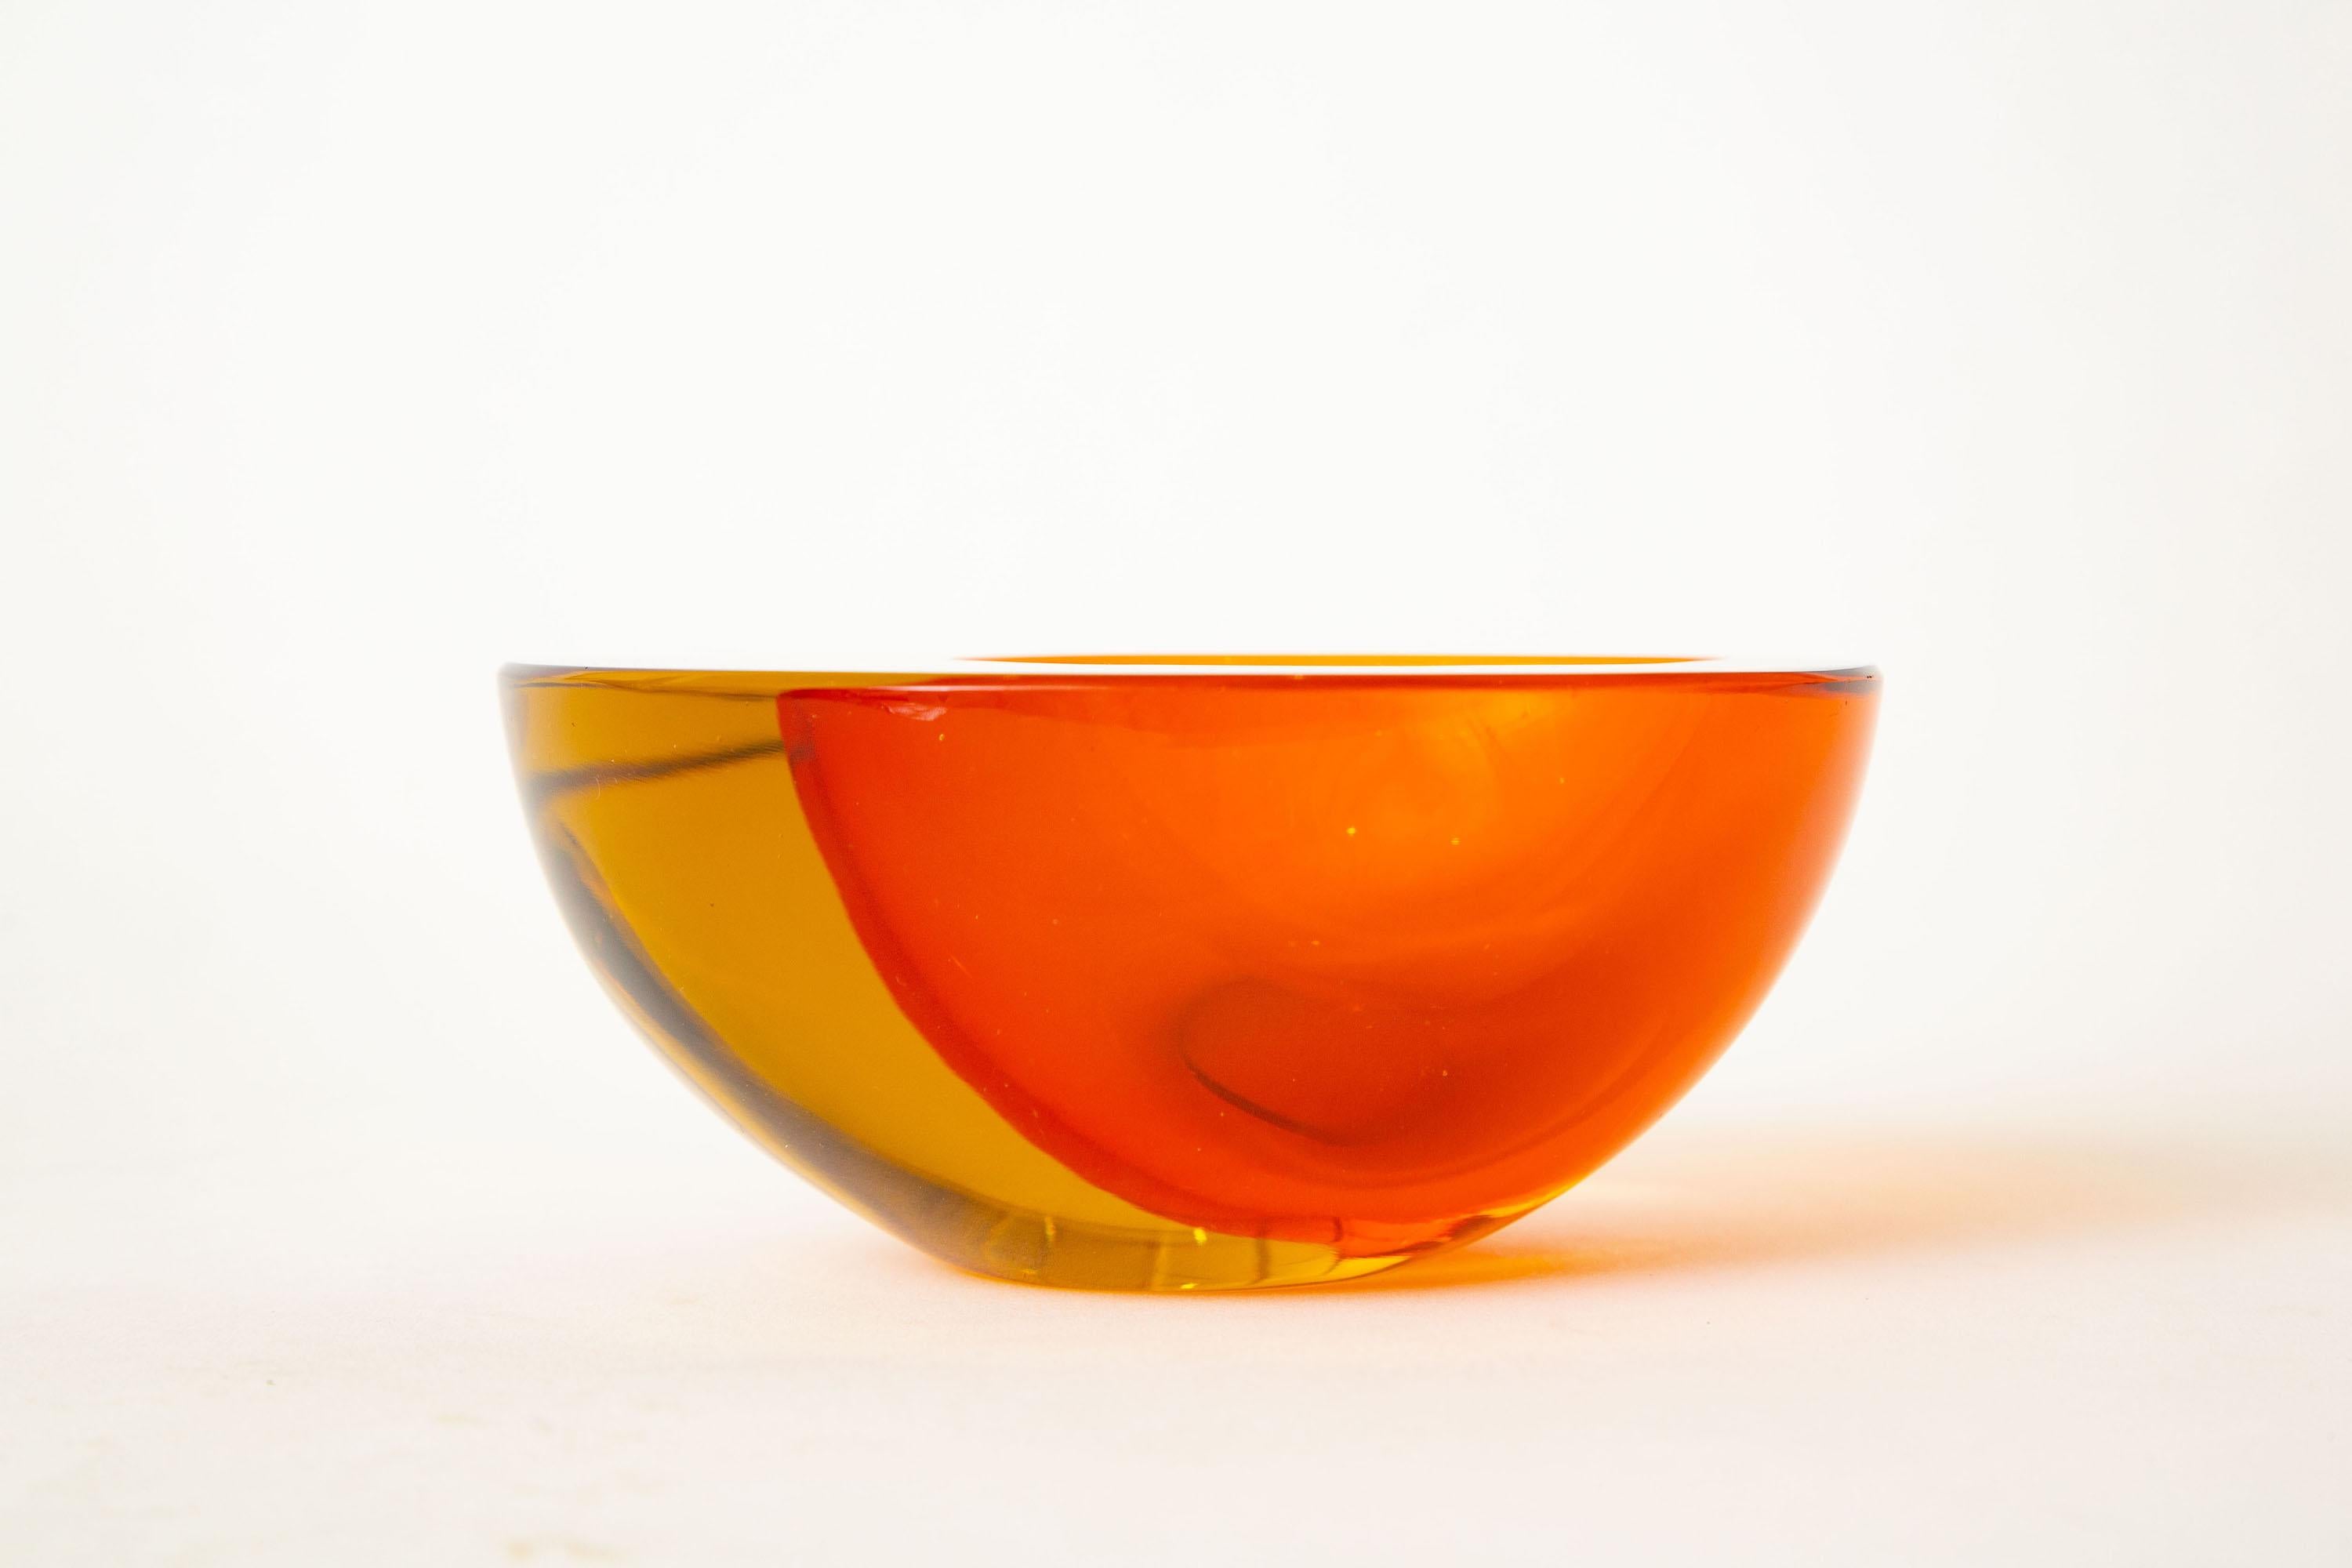 Blown Glass Murano Mandruzzato Orange and Amber Yellow Sommerso Geode Glass Bowl Vintage